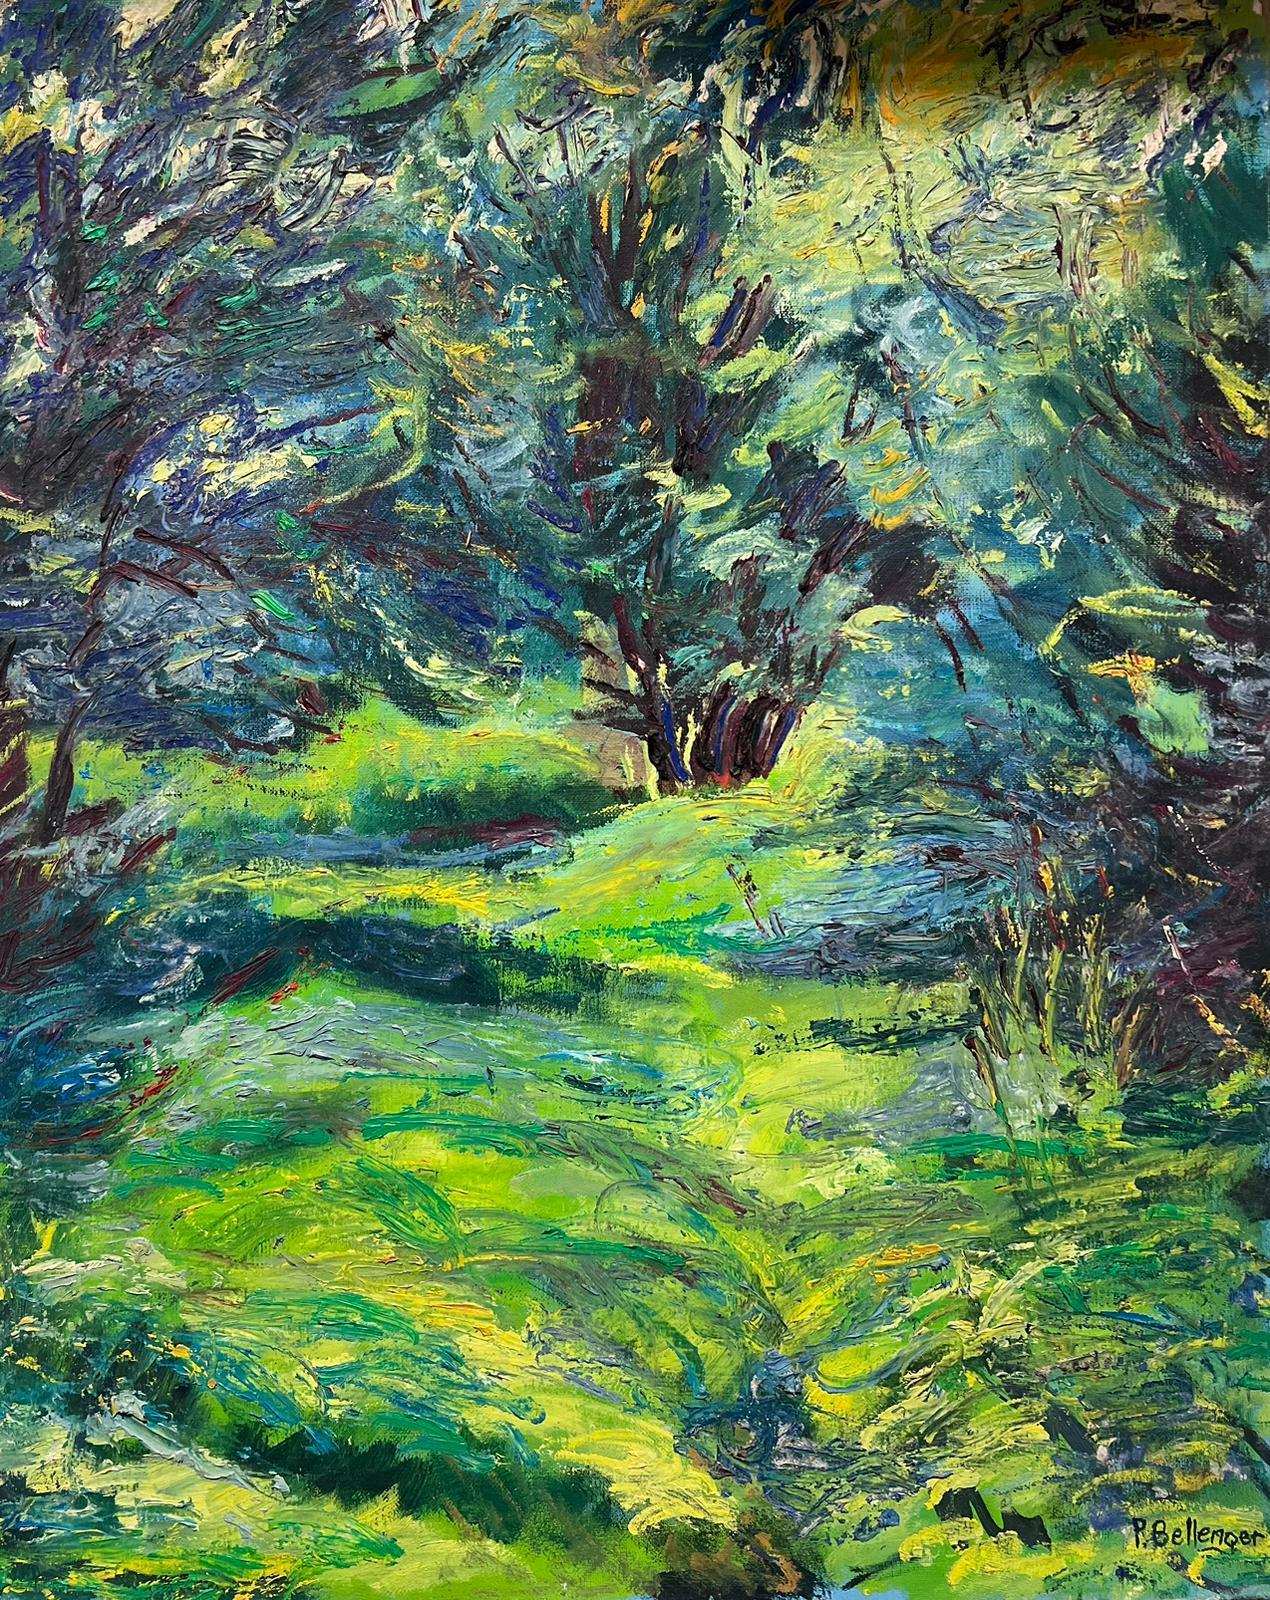 P. Bellenger (French Impressionist) Landscape Painting - 20th Century French Impressionist Oil Painting Lush Green Woodland Dappled Light